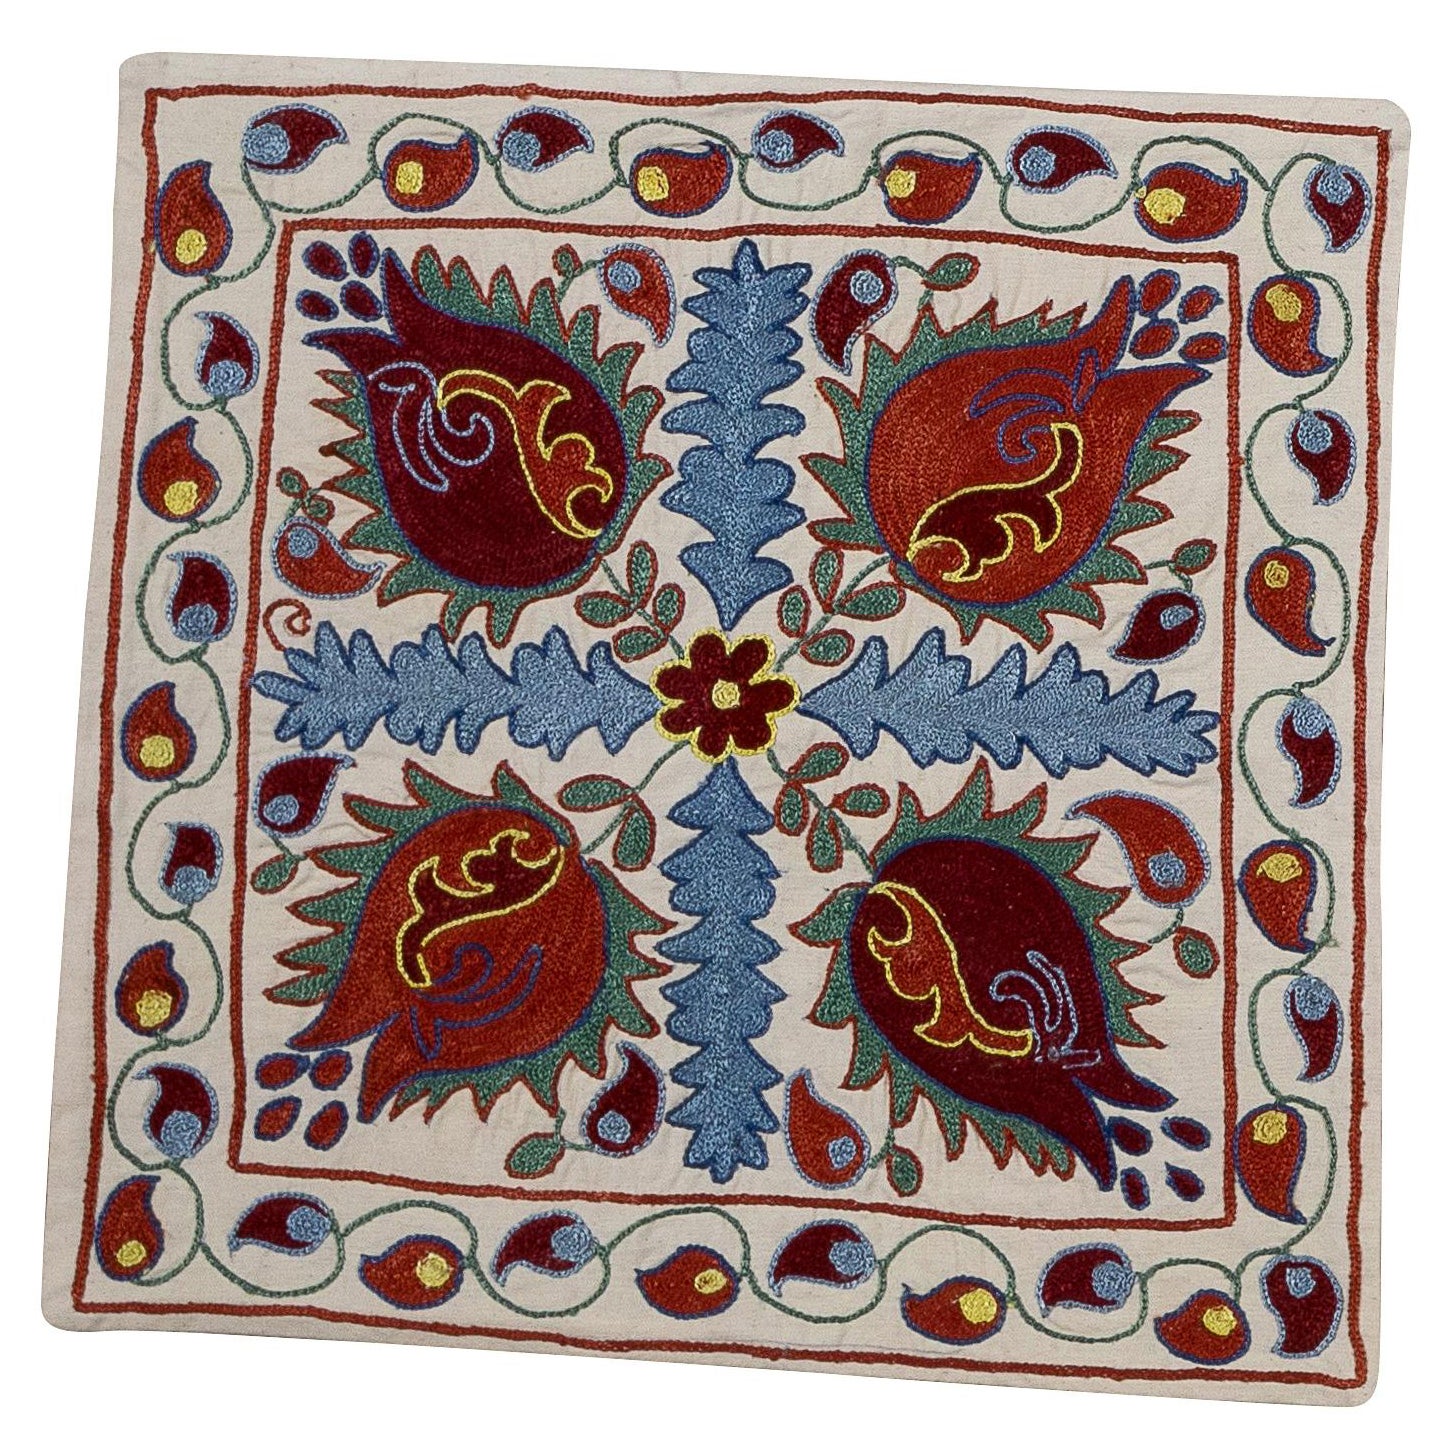  18"x18" Uzbek Suzani Lace Pillow, Embroidered Cream Cushion Cover, Silk Sham For Sale